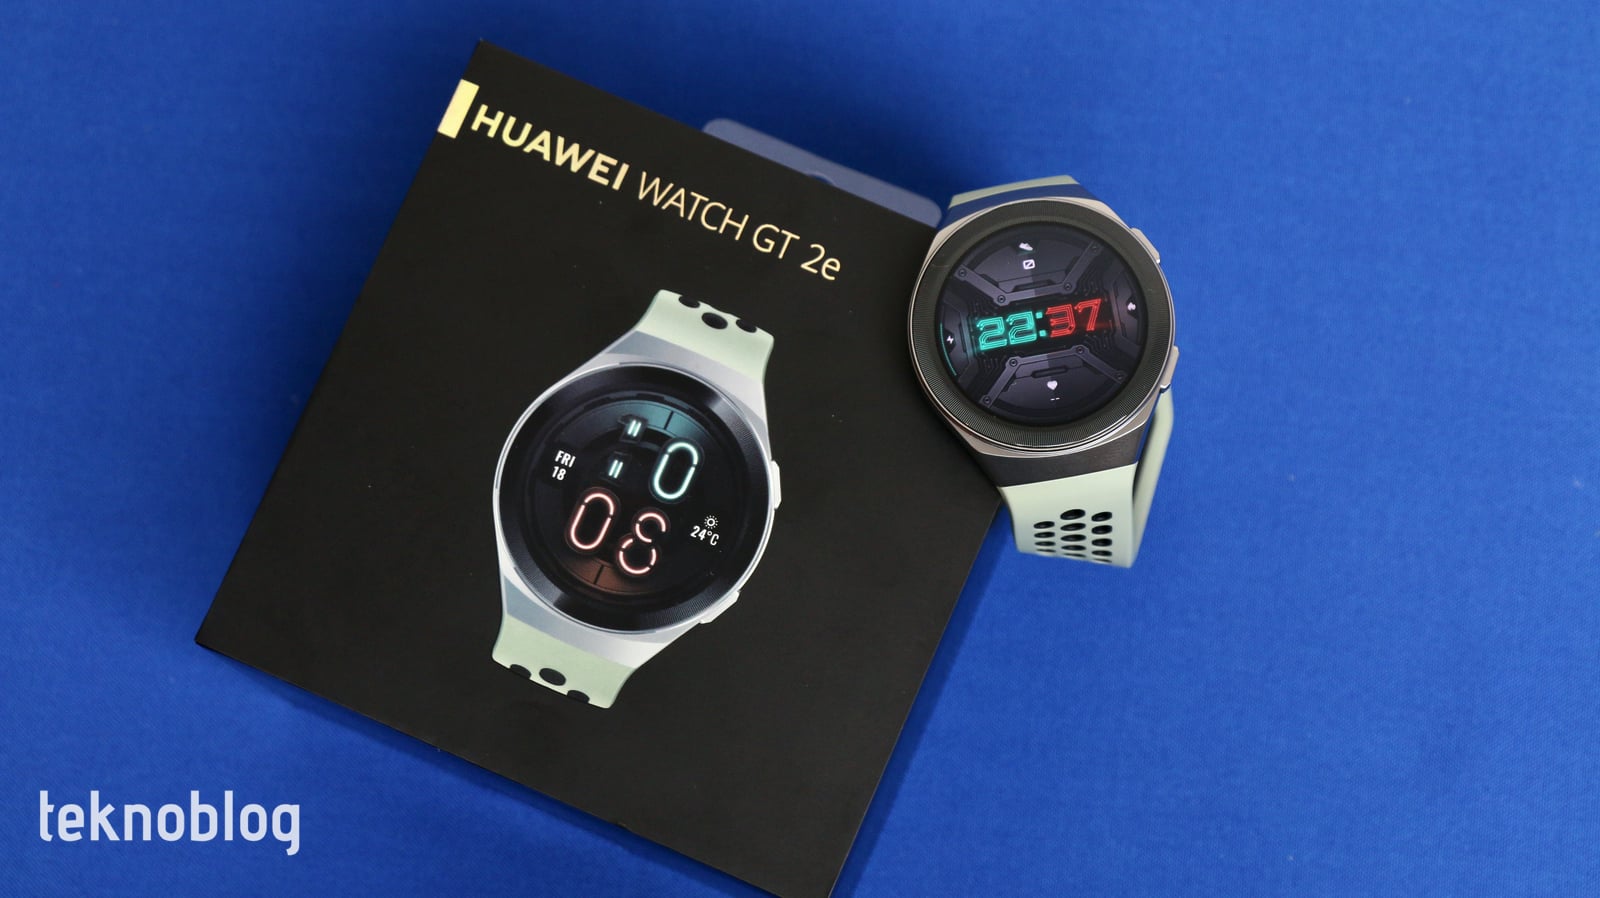 Huawei watch gt2e 46 мм как называется блок управления кнопок. Как подключить часы huawei gt